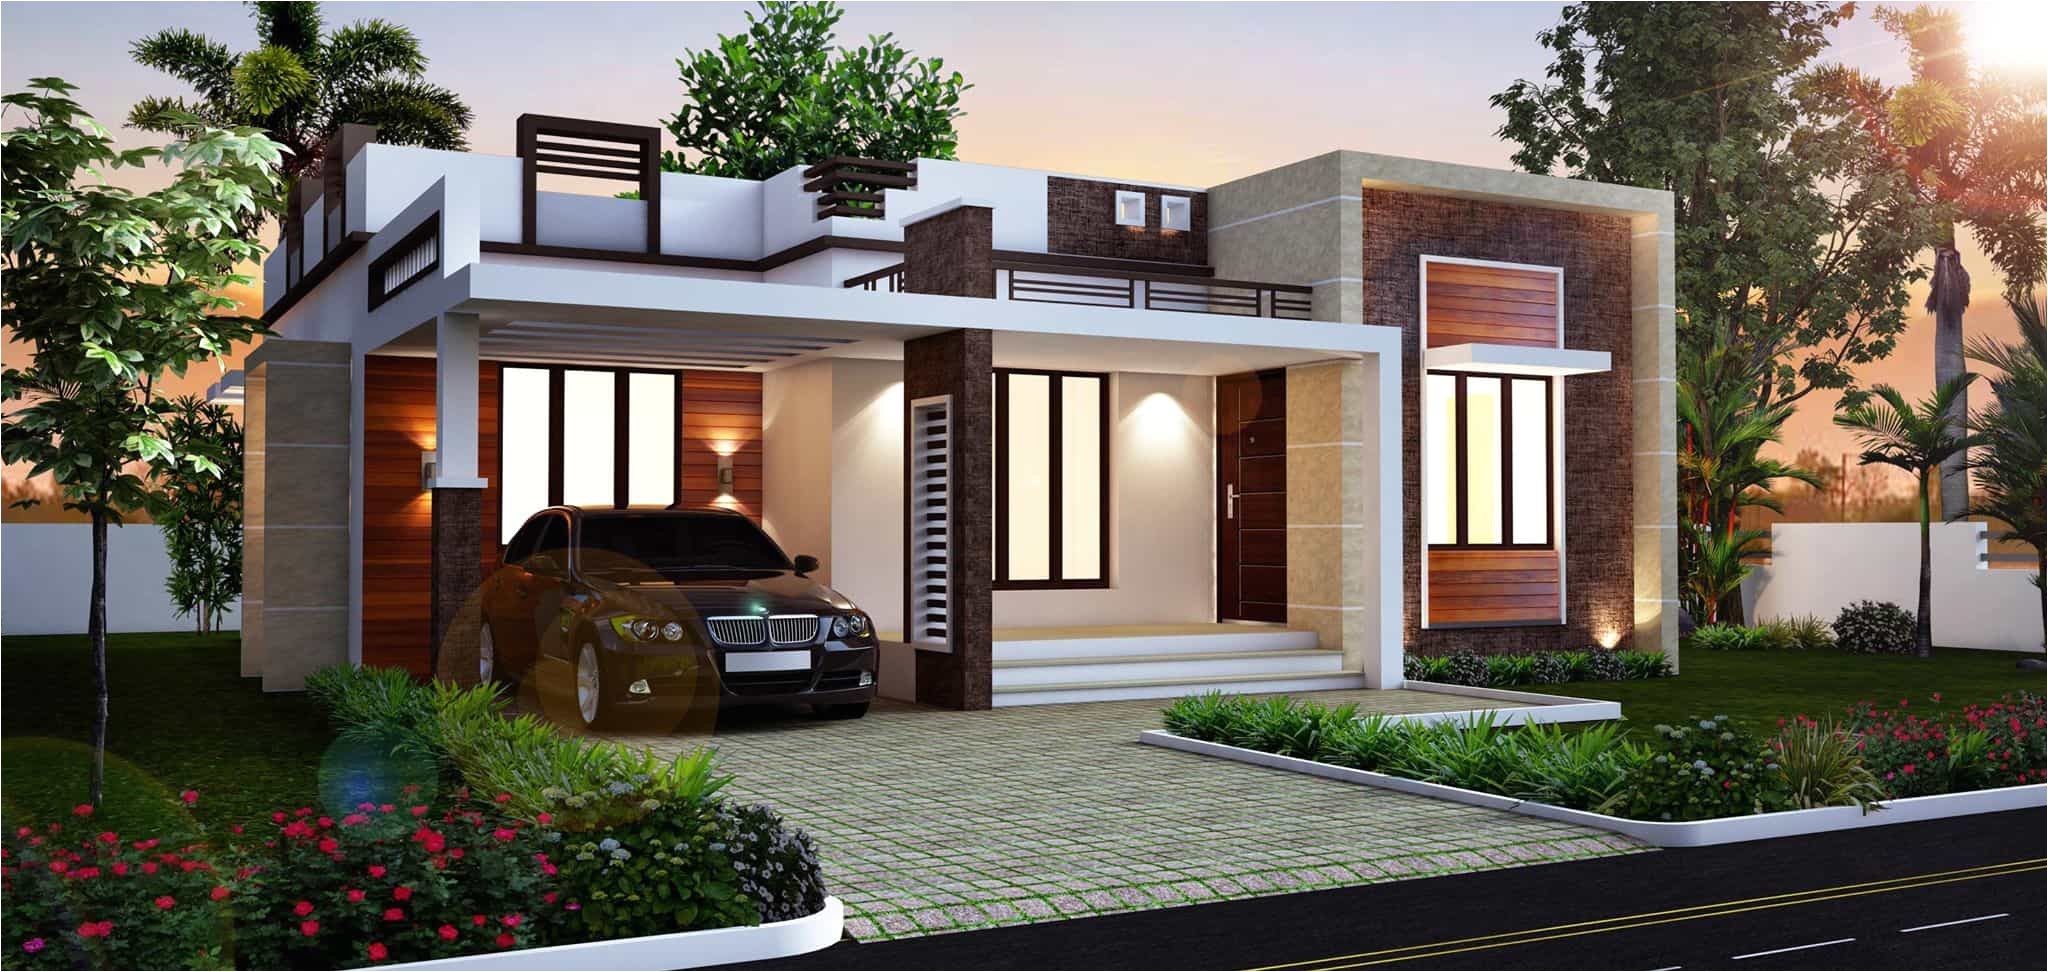 kerala home design house plans